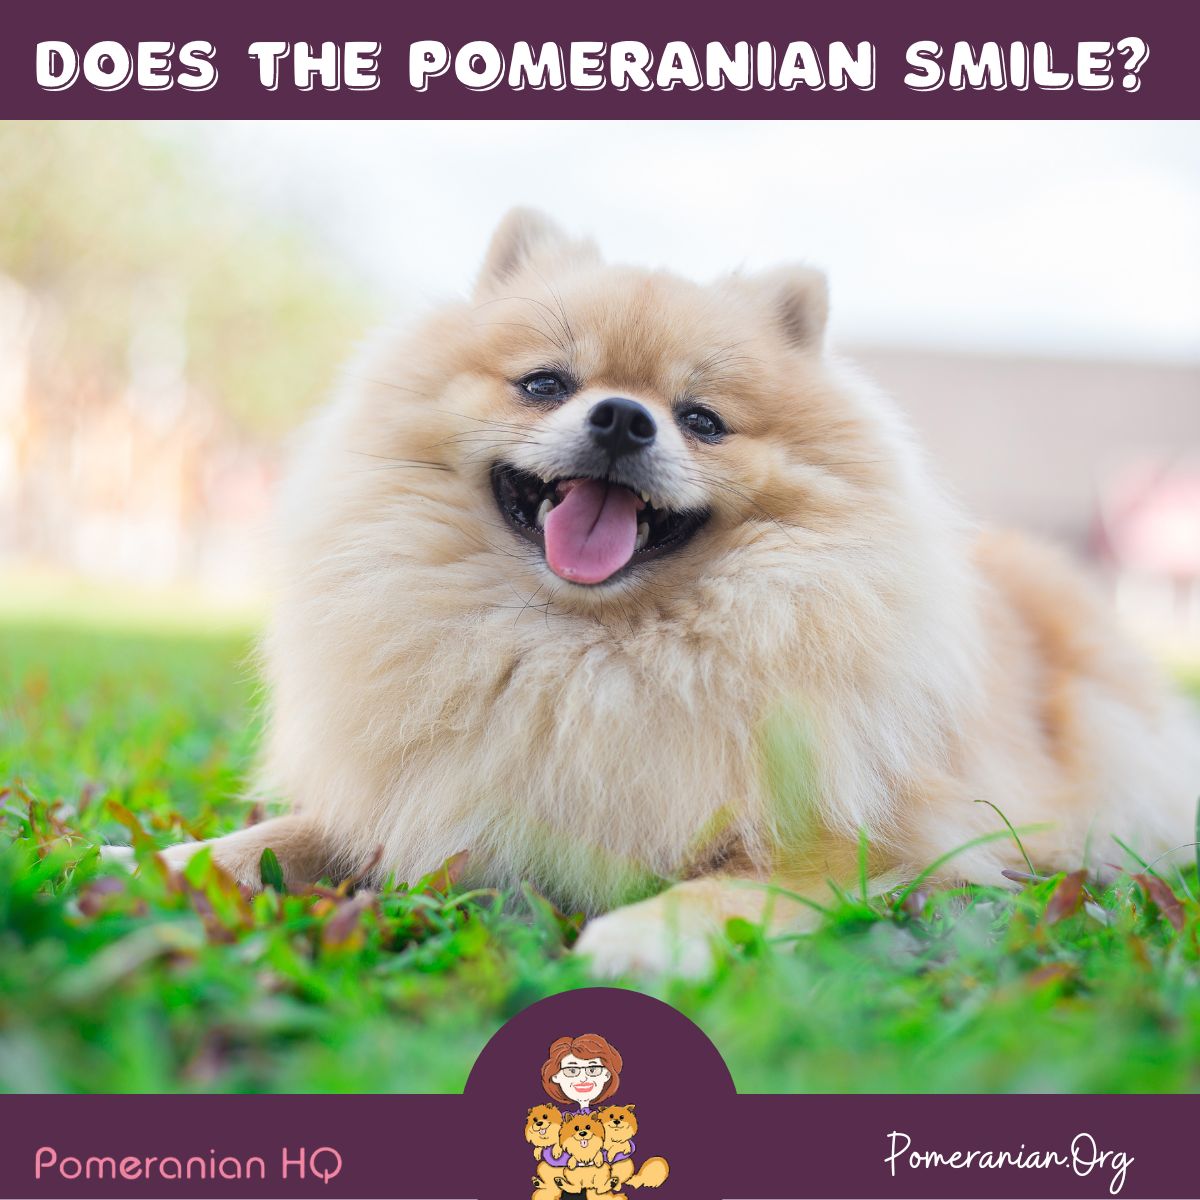 Pomeranian smile